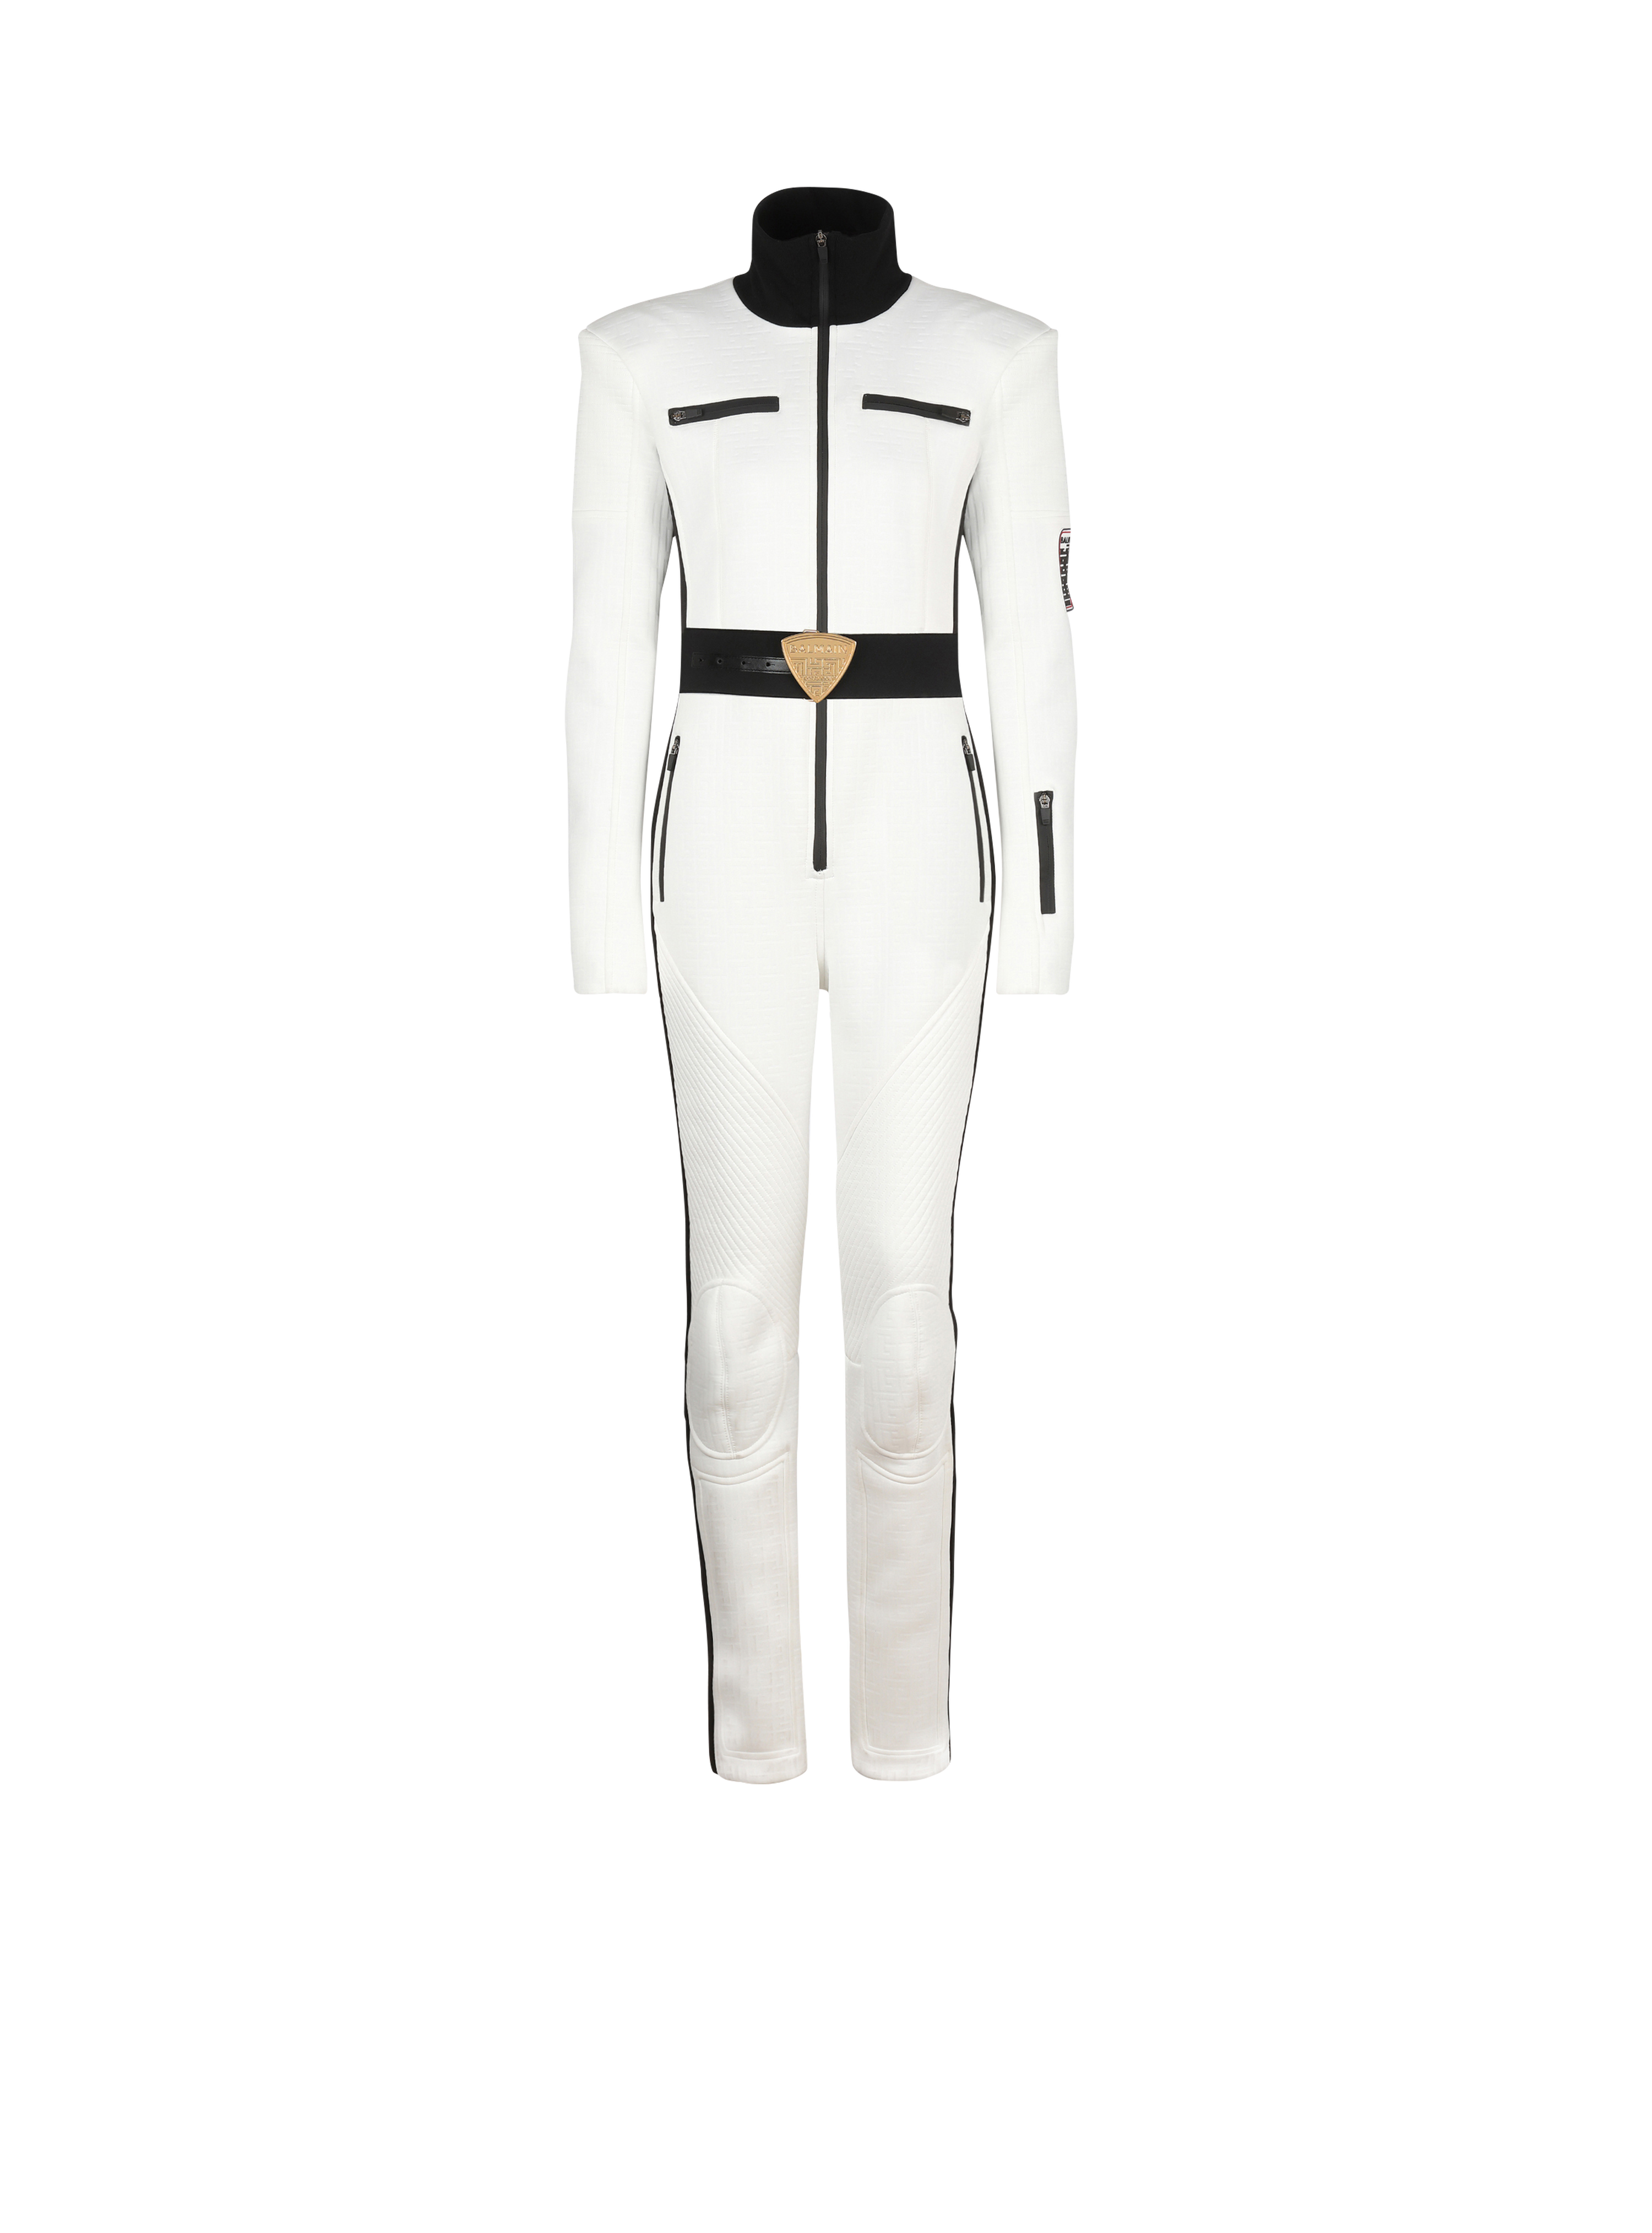 Balmain x Rossignol - Balmain monogram ski suit, white